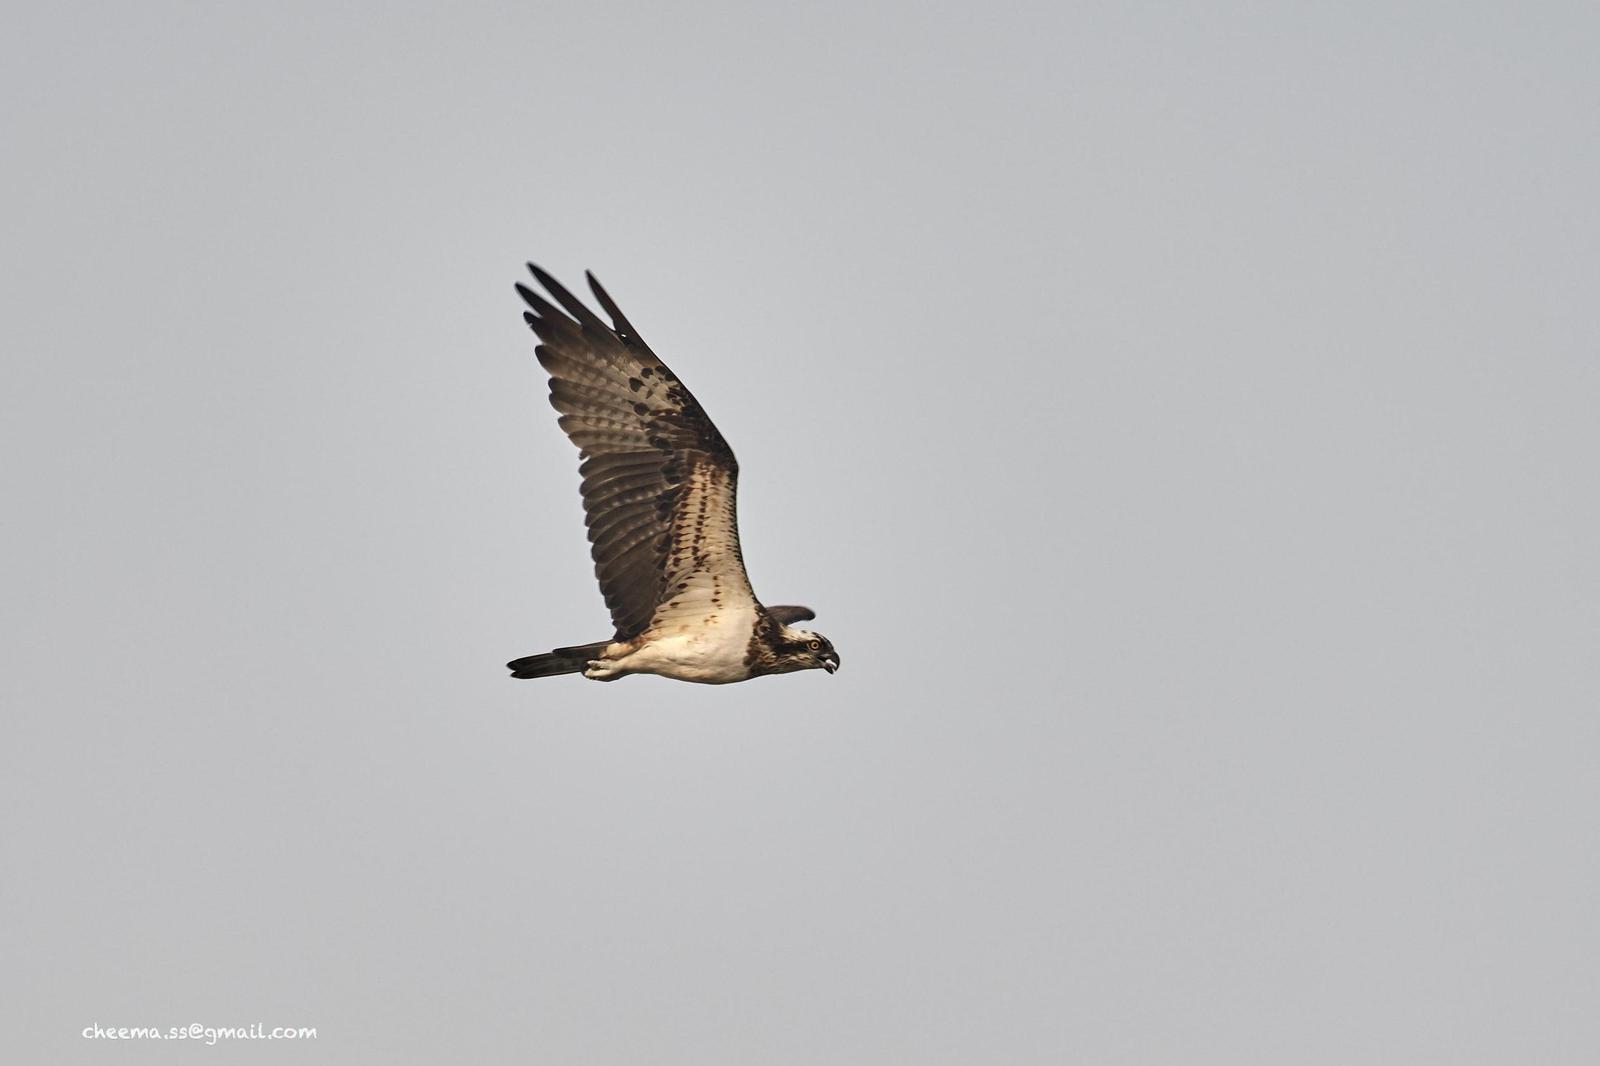 Osprey Photo by Simepreet Cheema